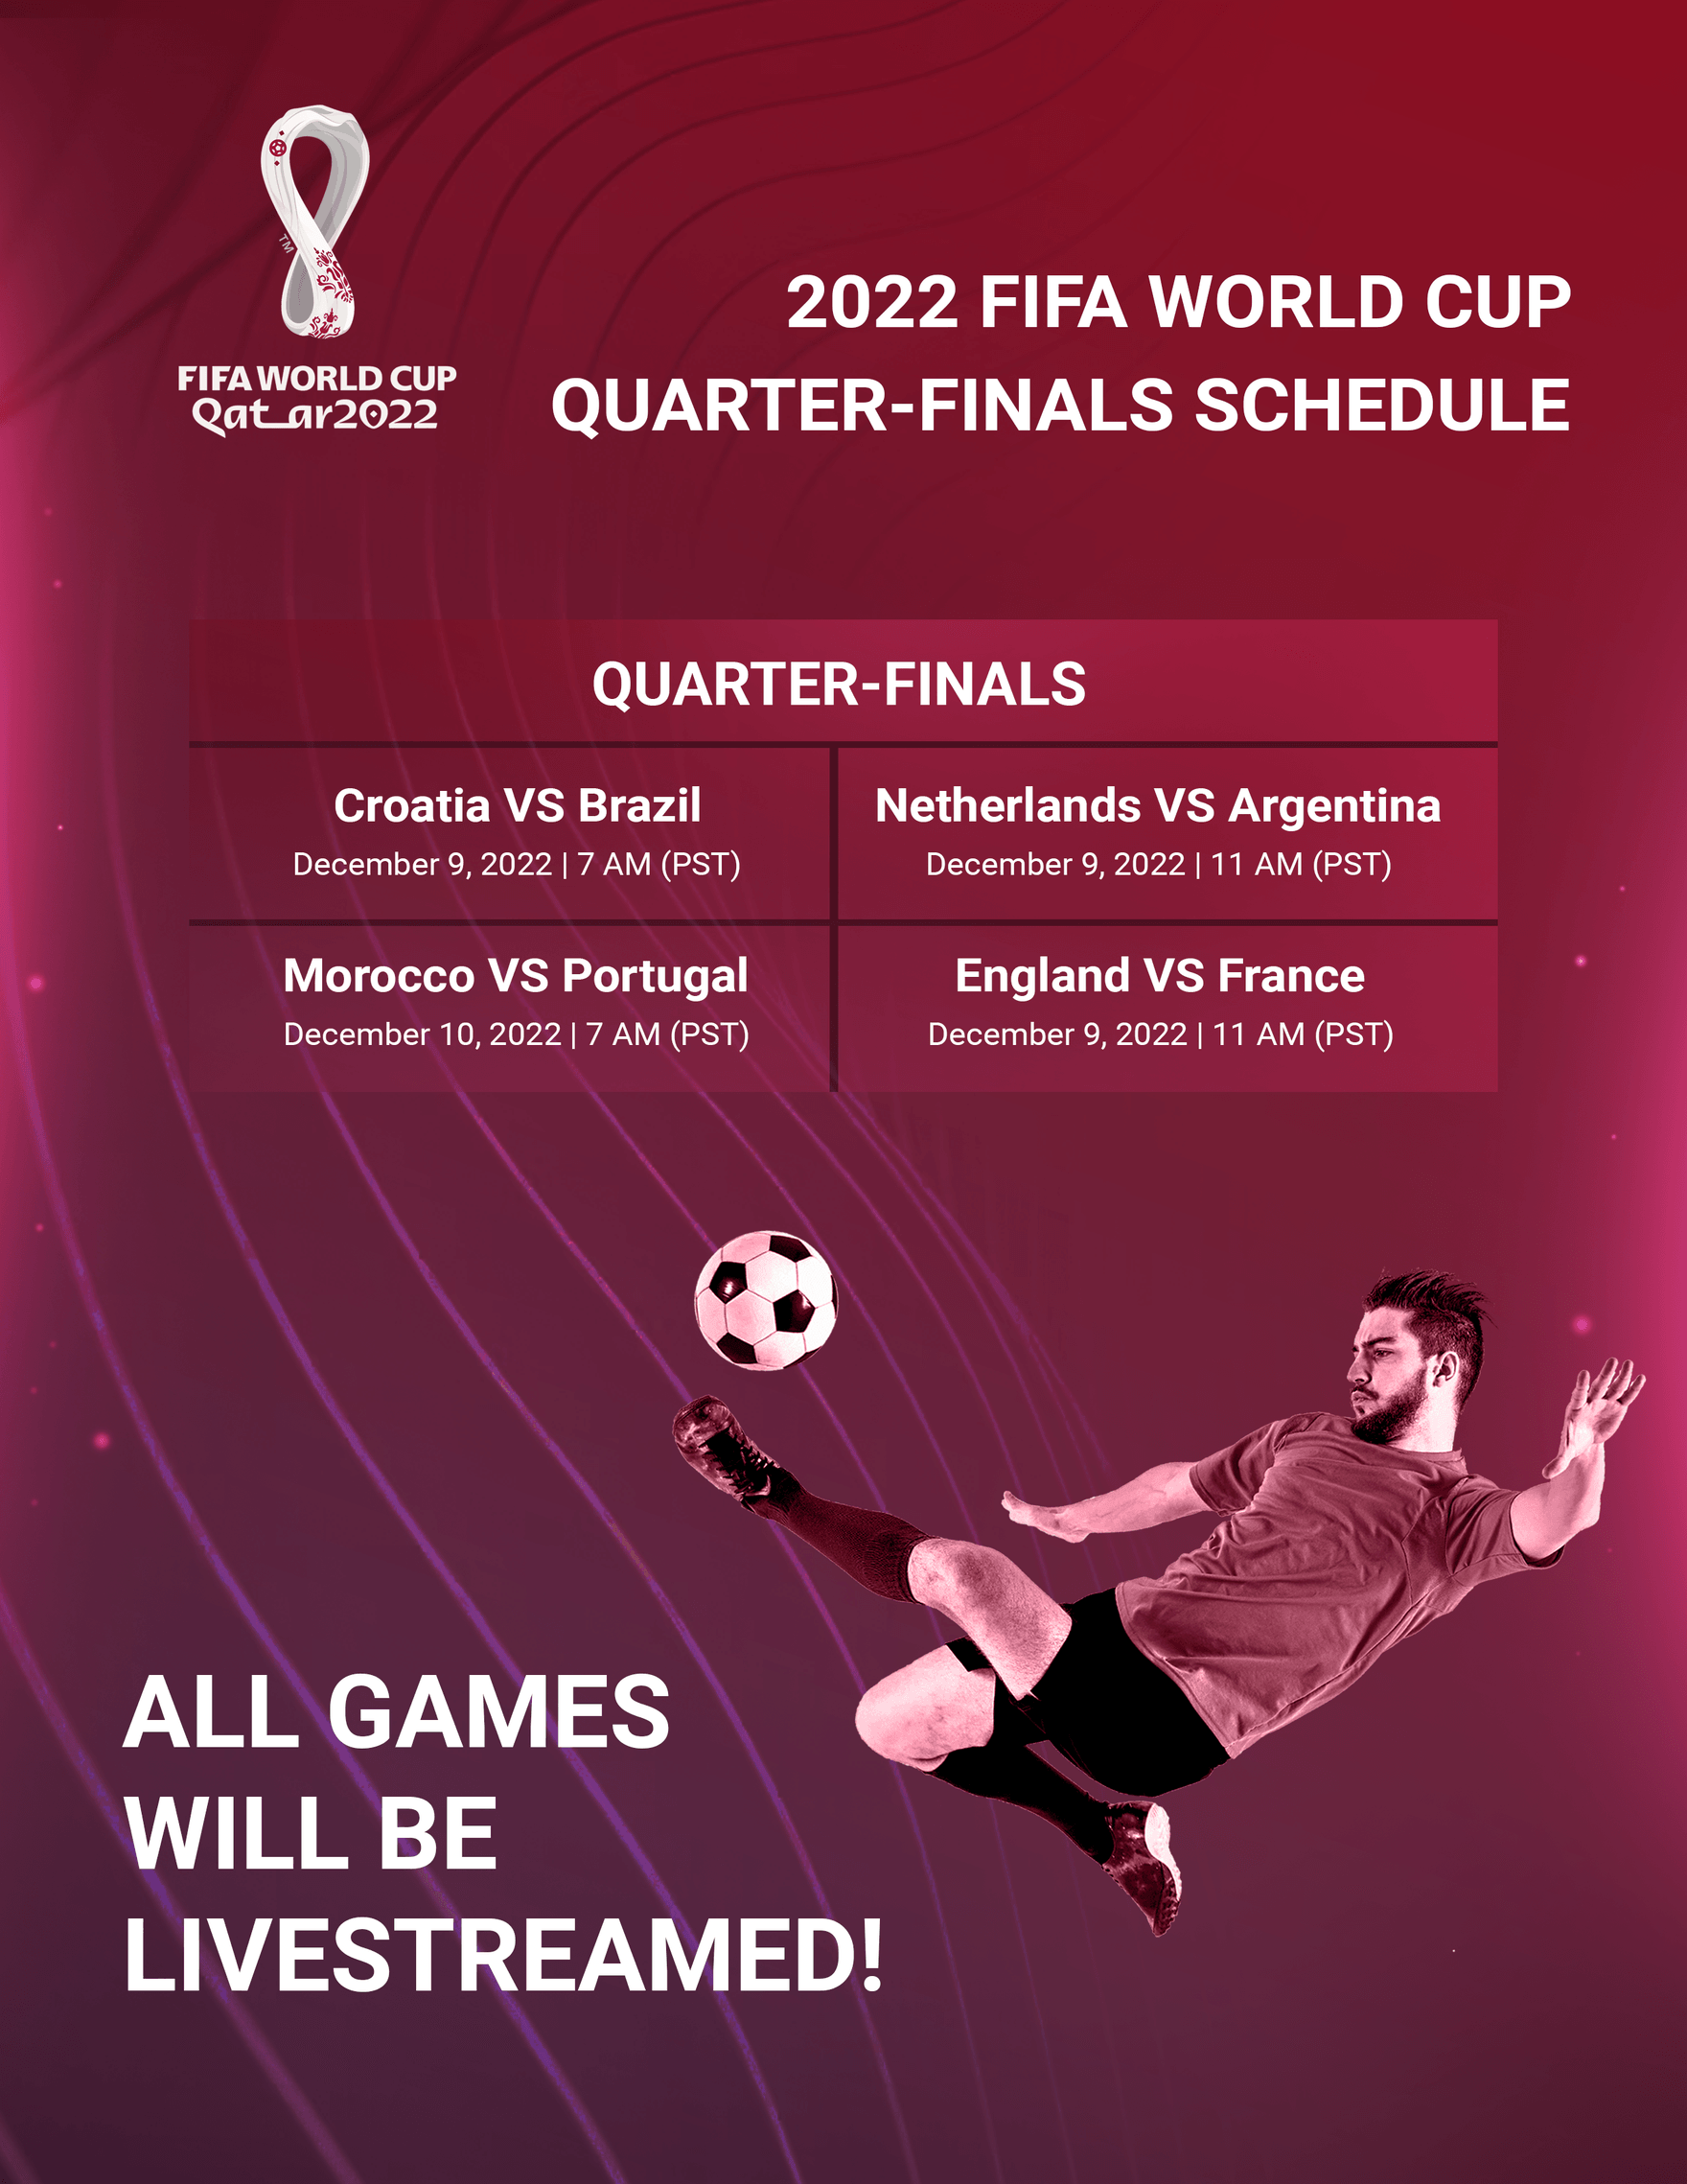 FIFA World Cup 2022 Quarter-Finals Schedule Poster